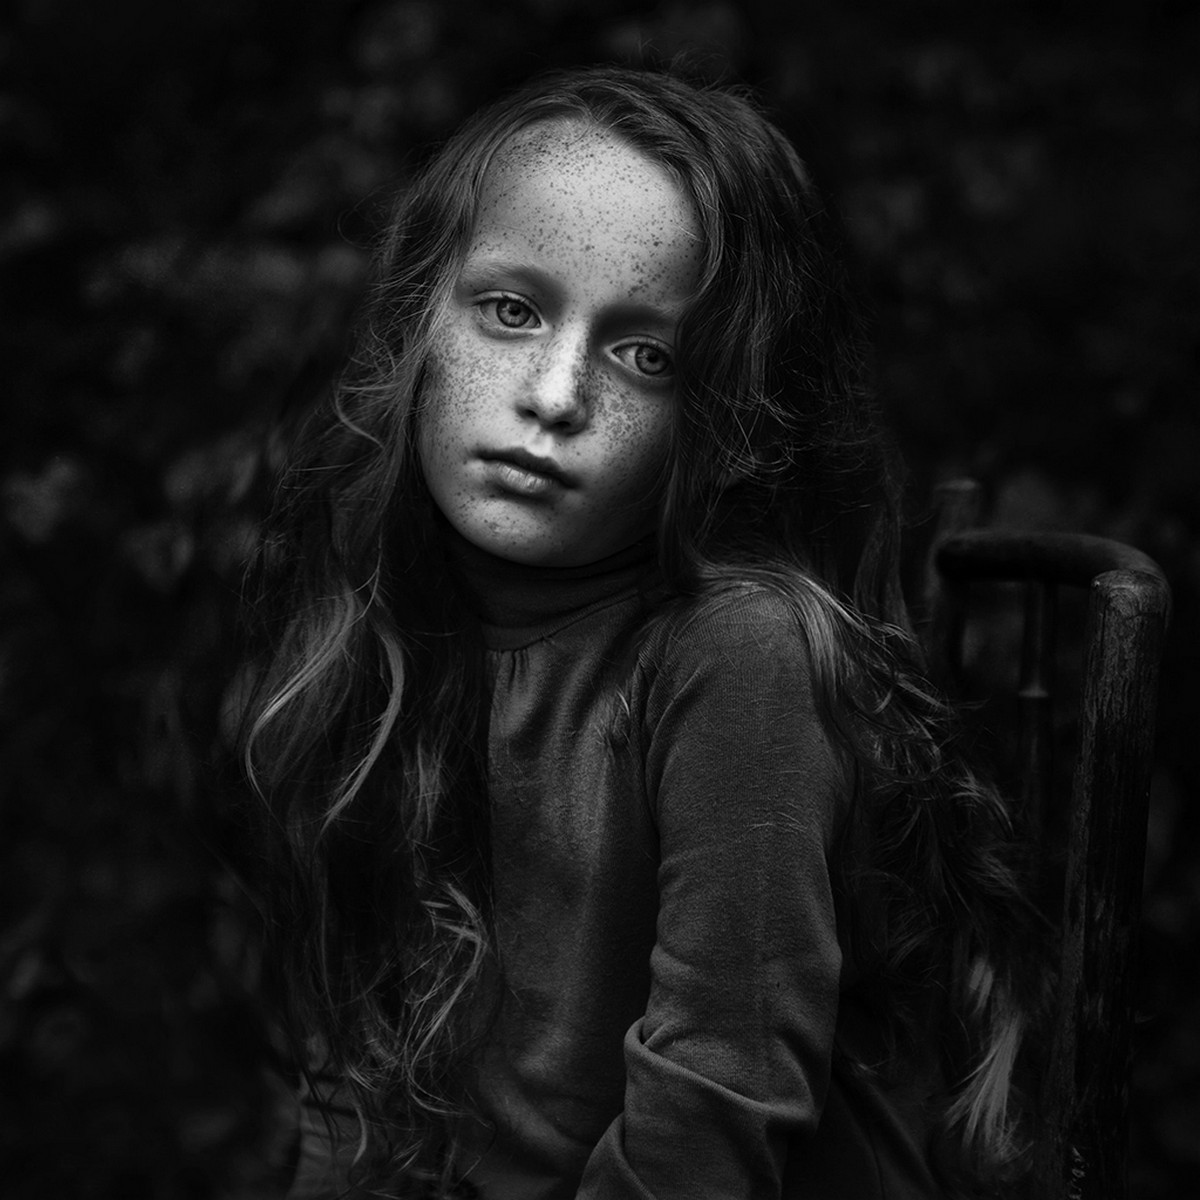 Победители Child Photo Competition 2018